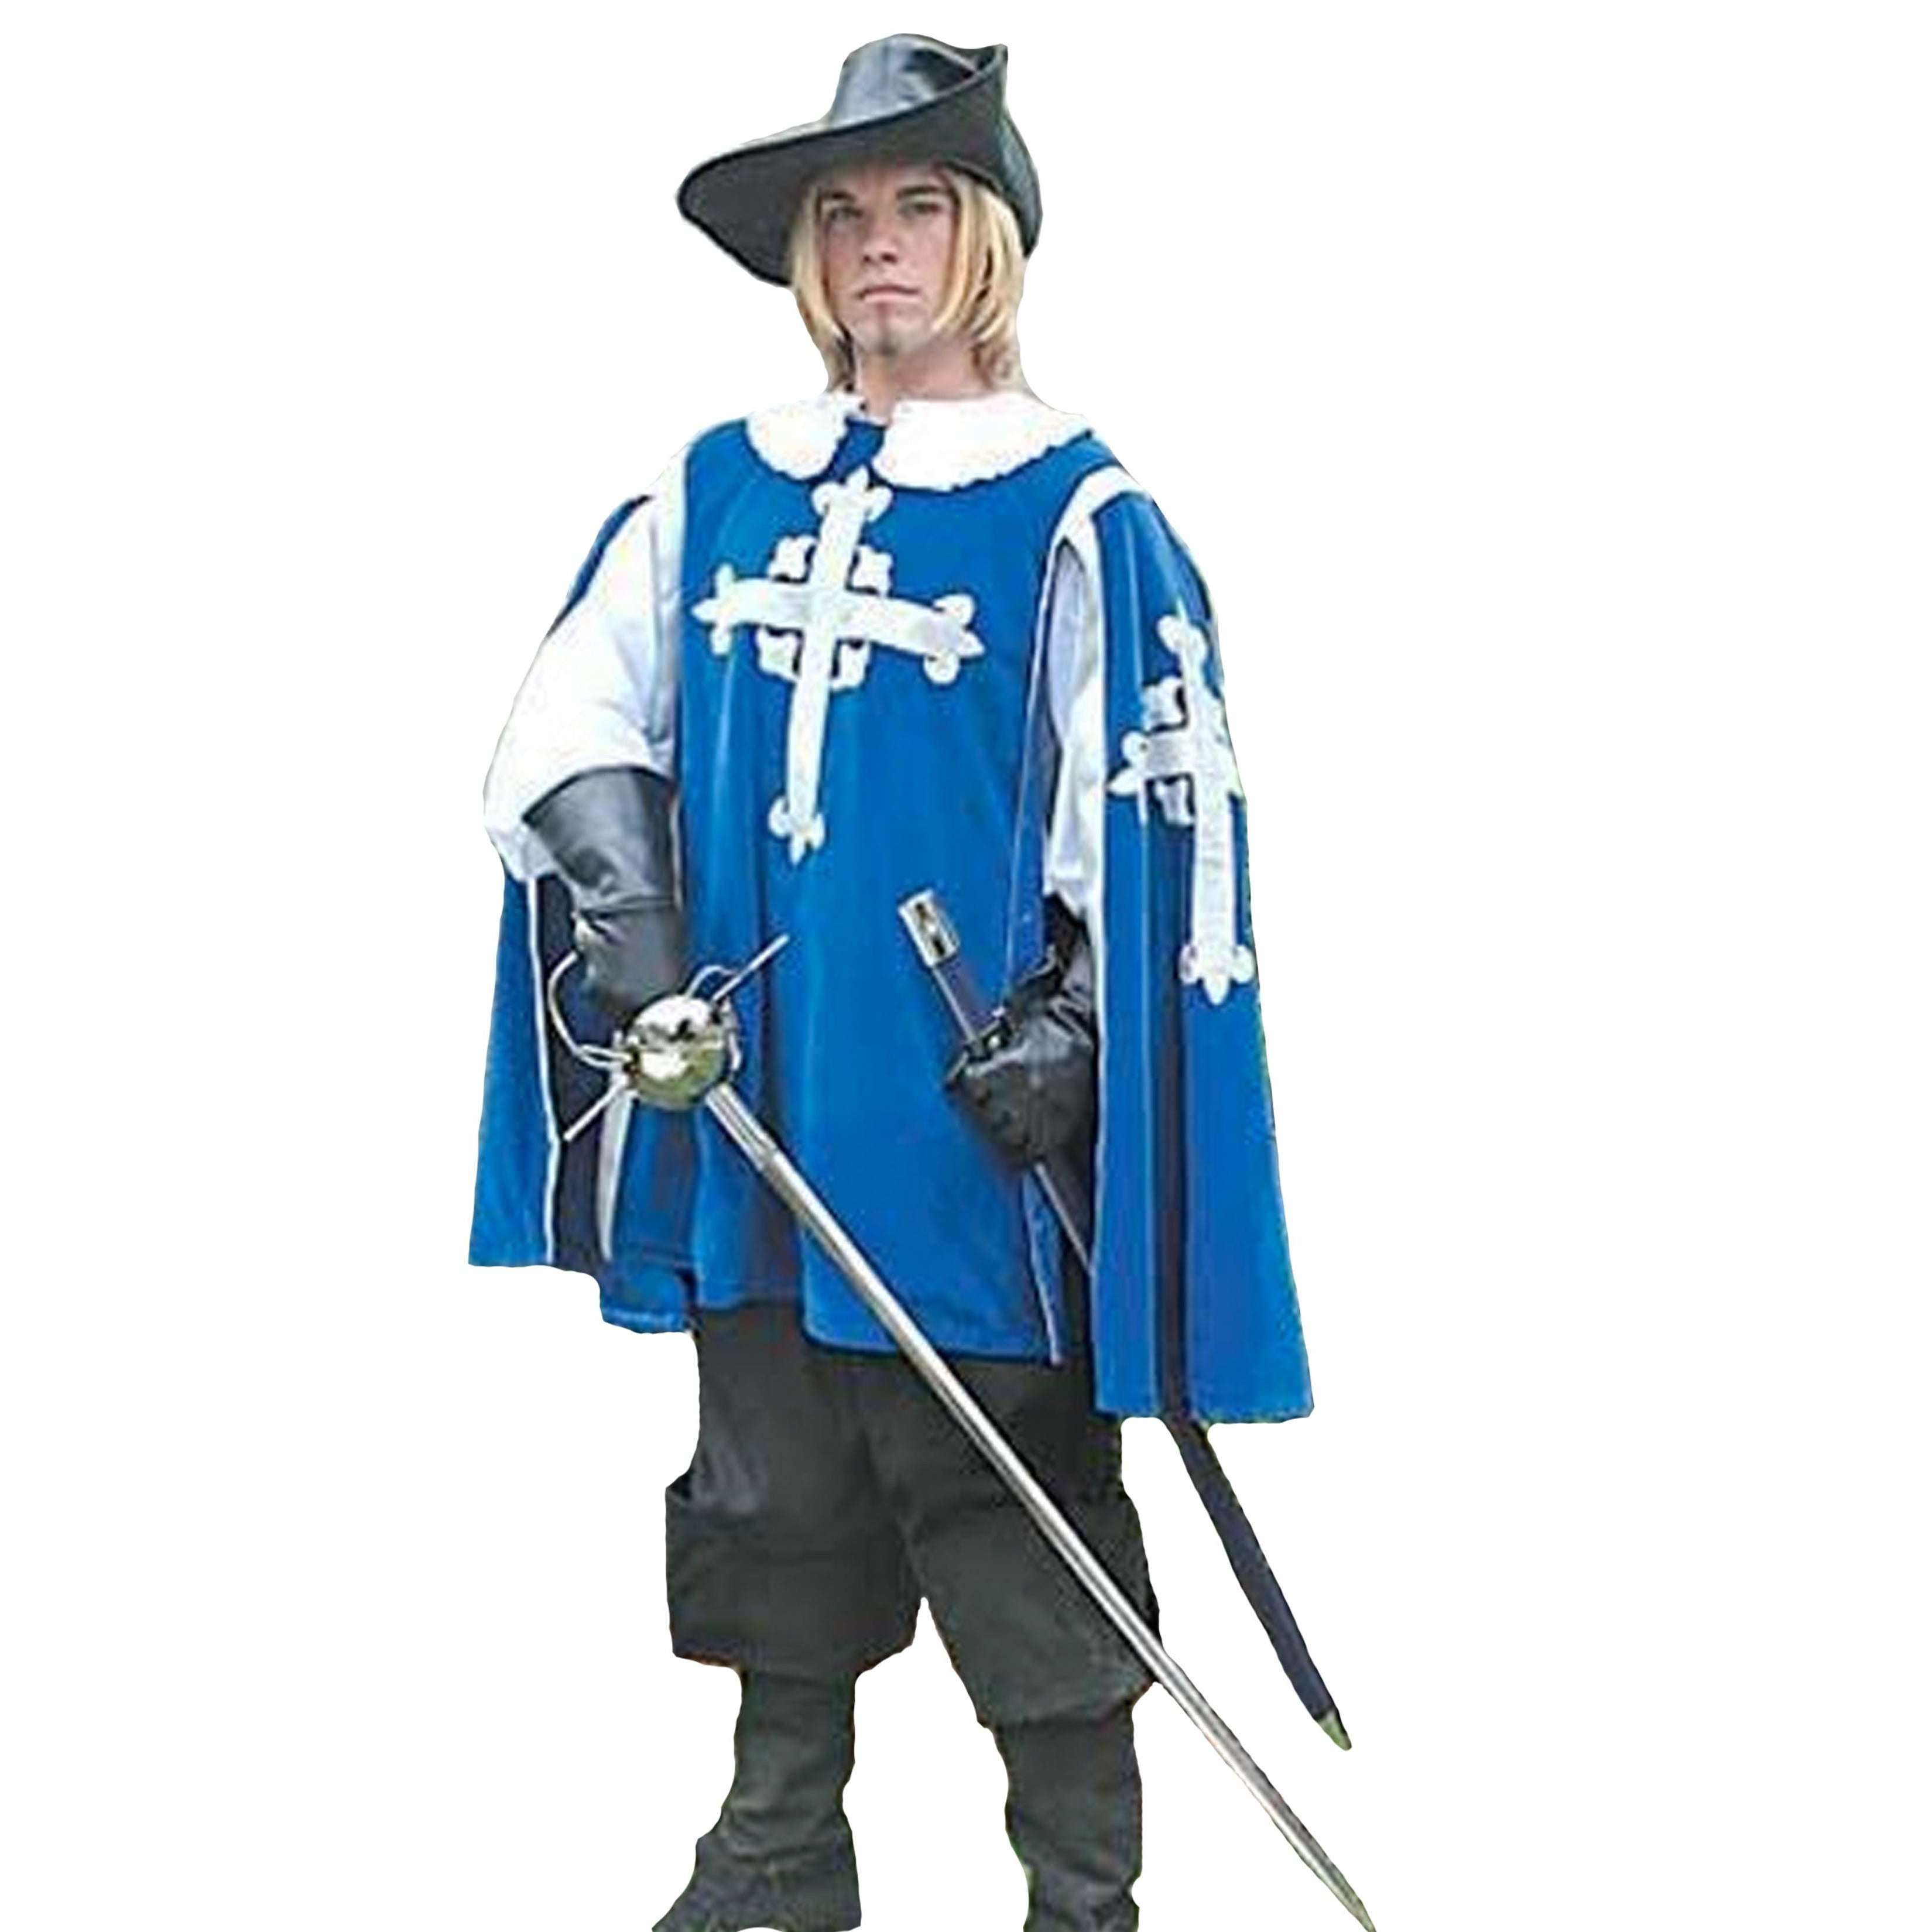 Cavalier Shirt - renaissance medieval clothing, costumes